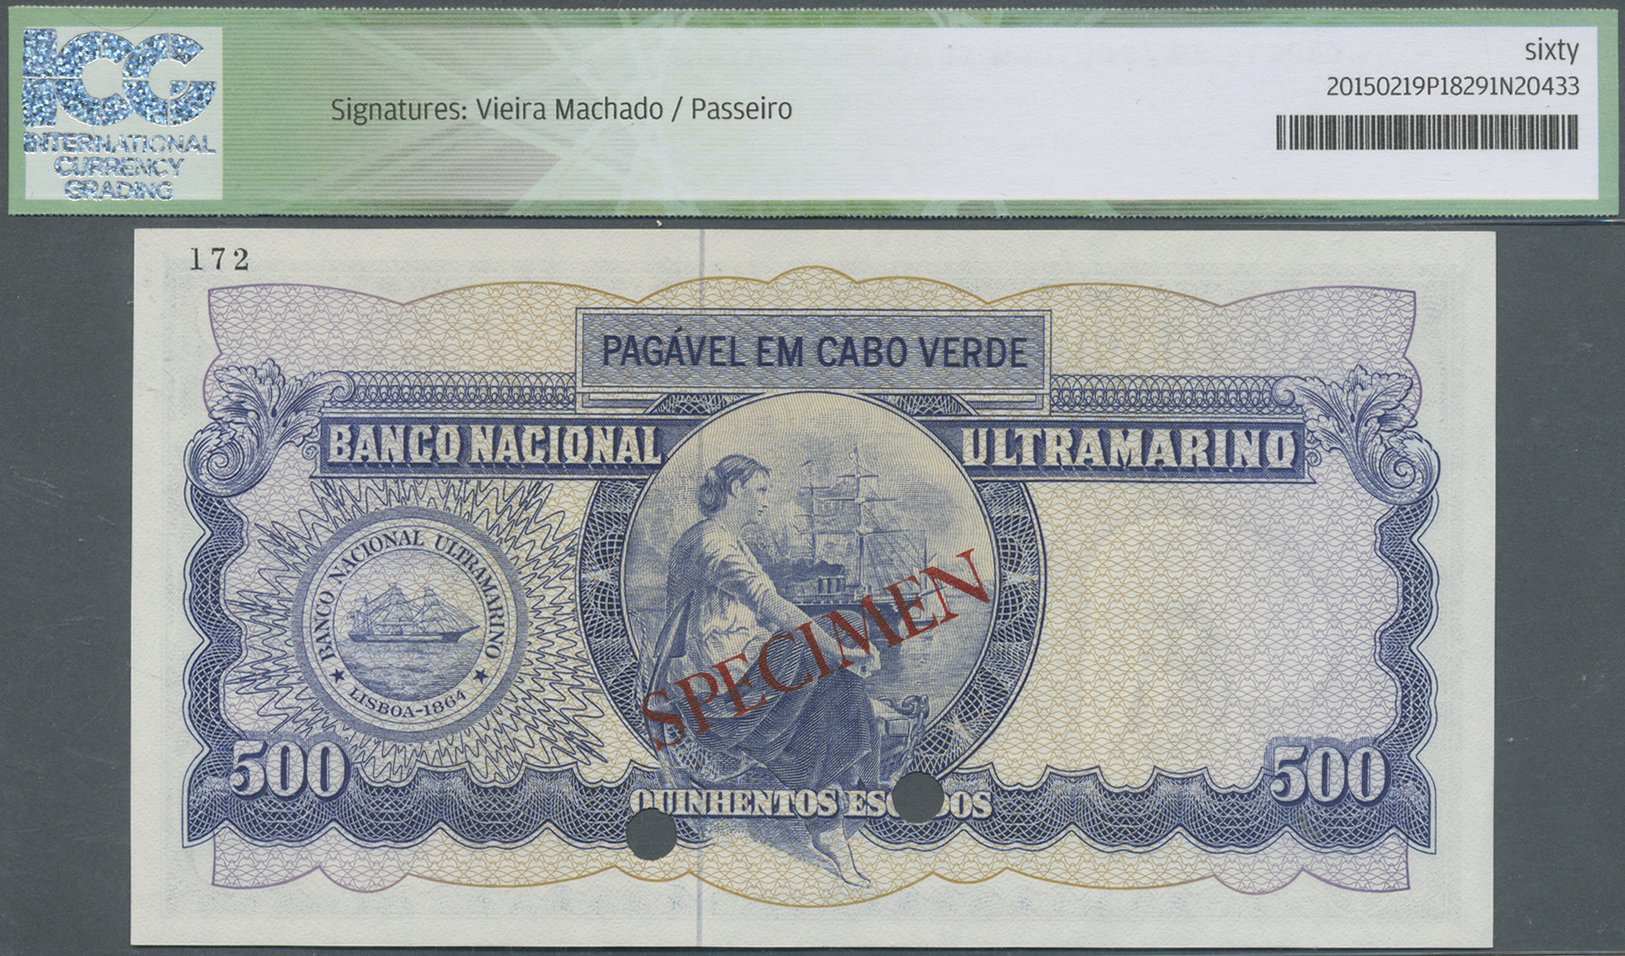 00503 Cape Verde / Kap Verde: 500 Escudos 1971 Specimen Color Trial P. 53Act With Specimen Overprint And Bank Cancellati - Cape Verde